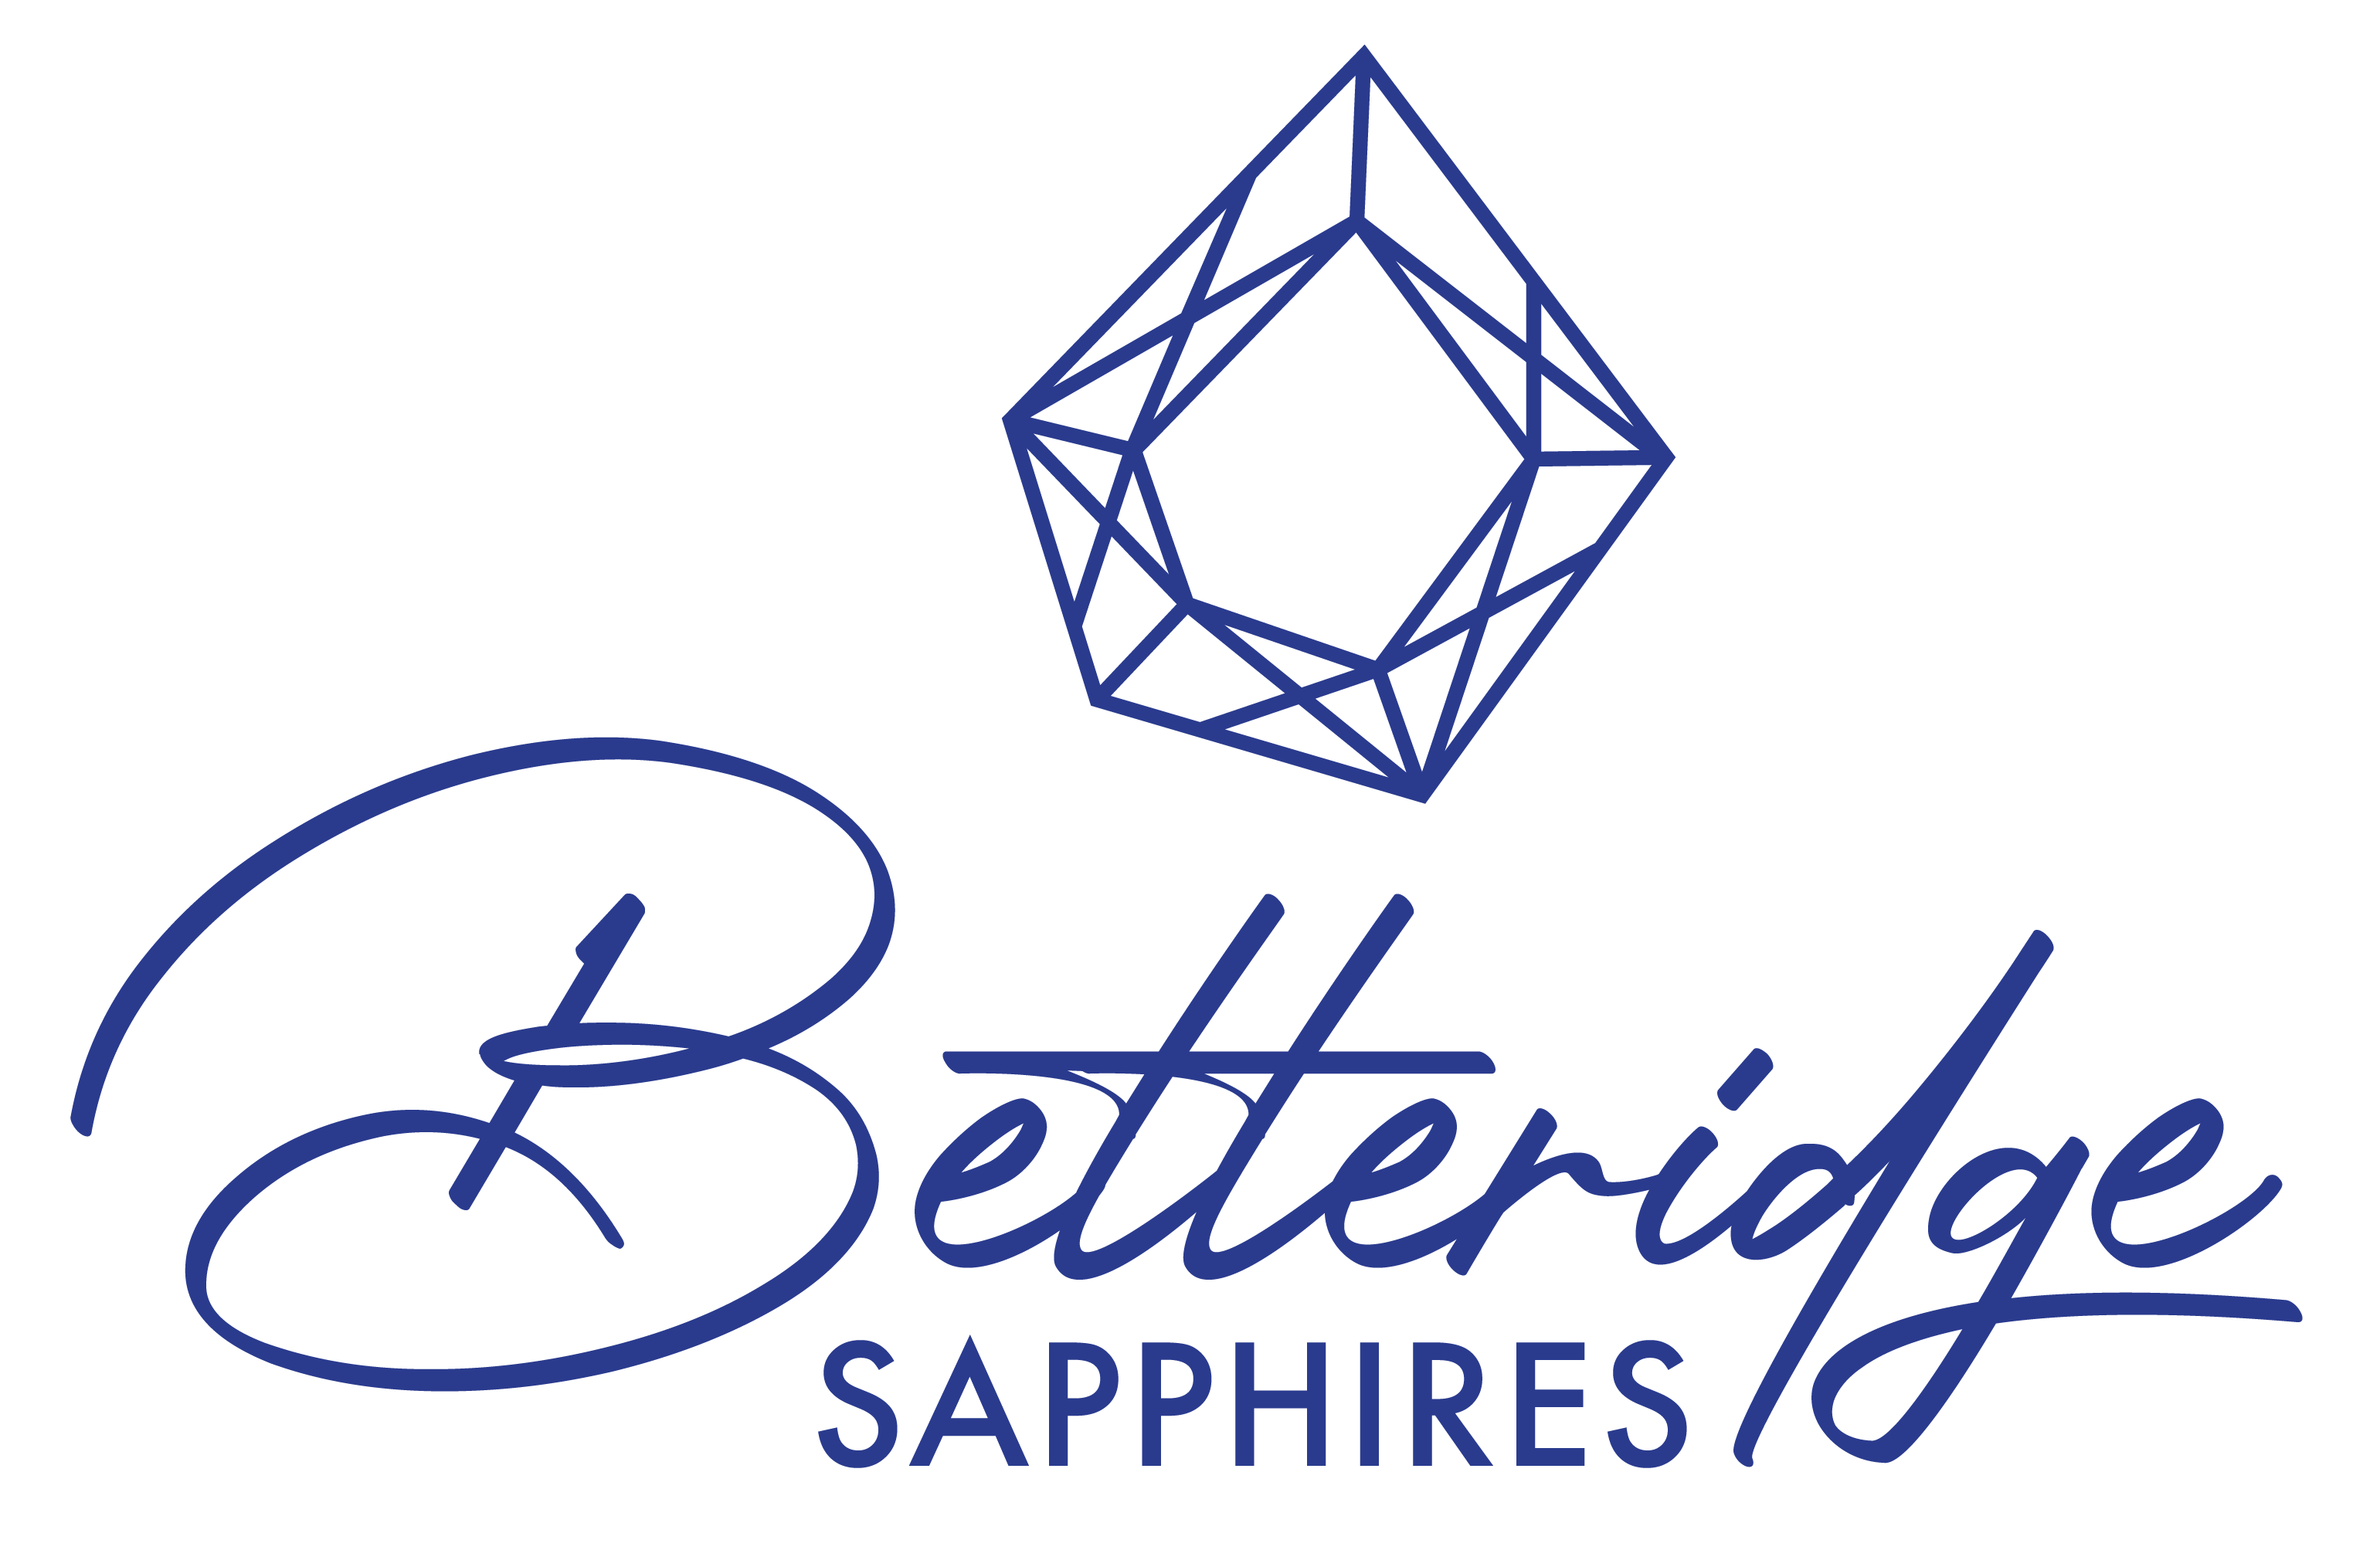 Betteridge Sapphires